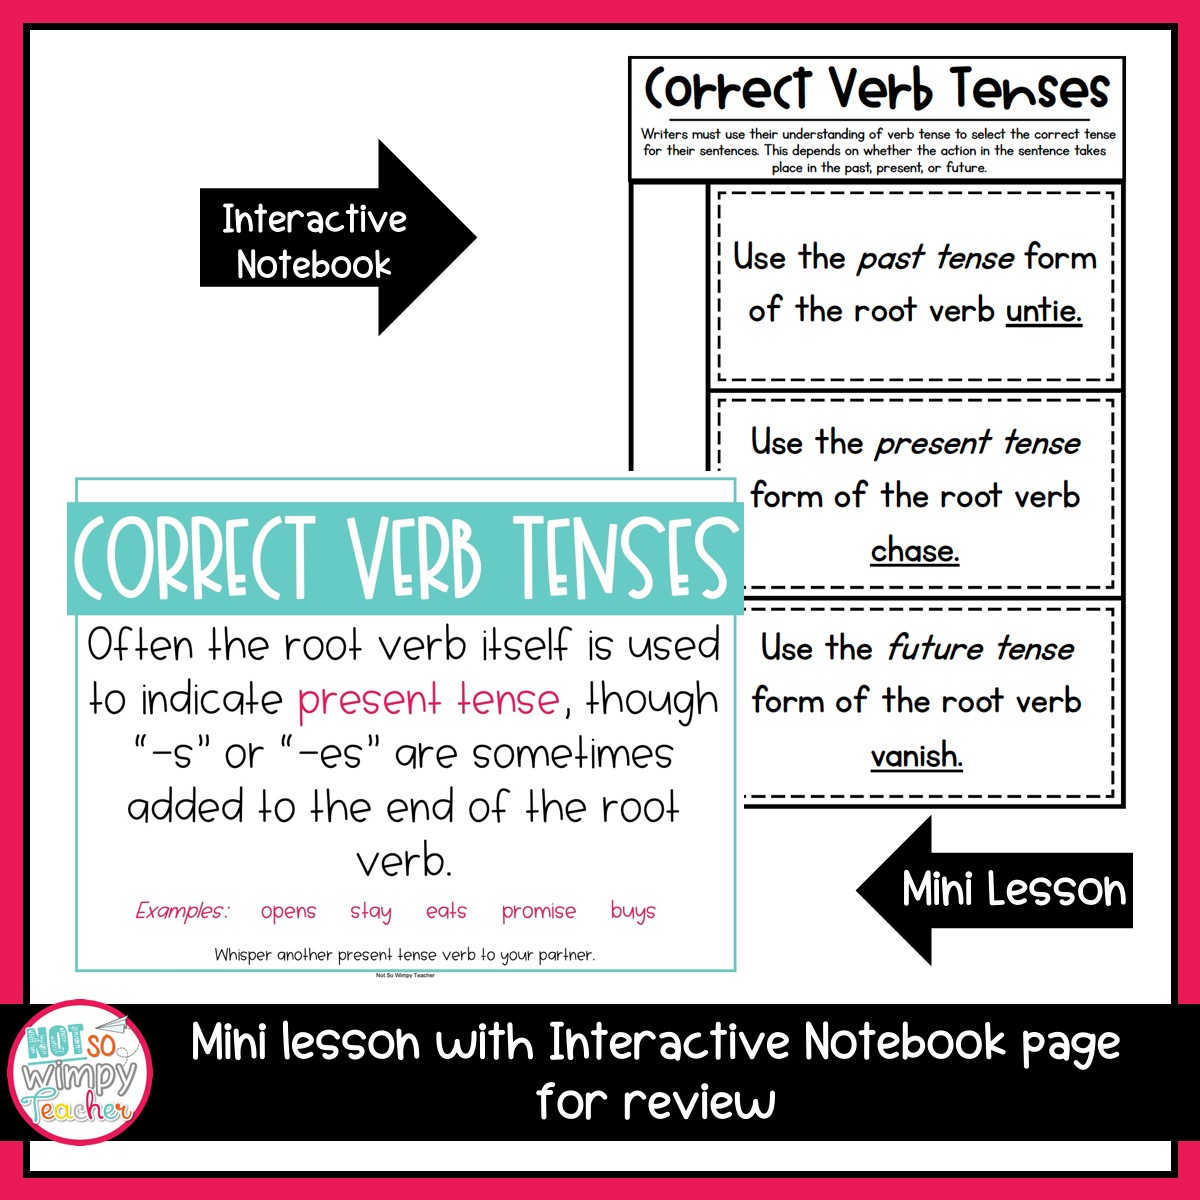 grammar-fifth-grade-activities-using-correct-verb-tenses-not-so-wimpy-teacher